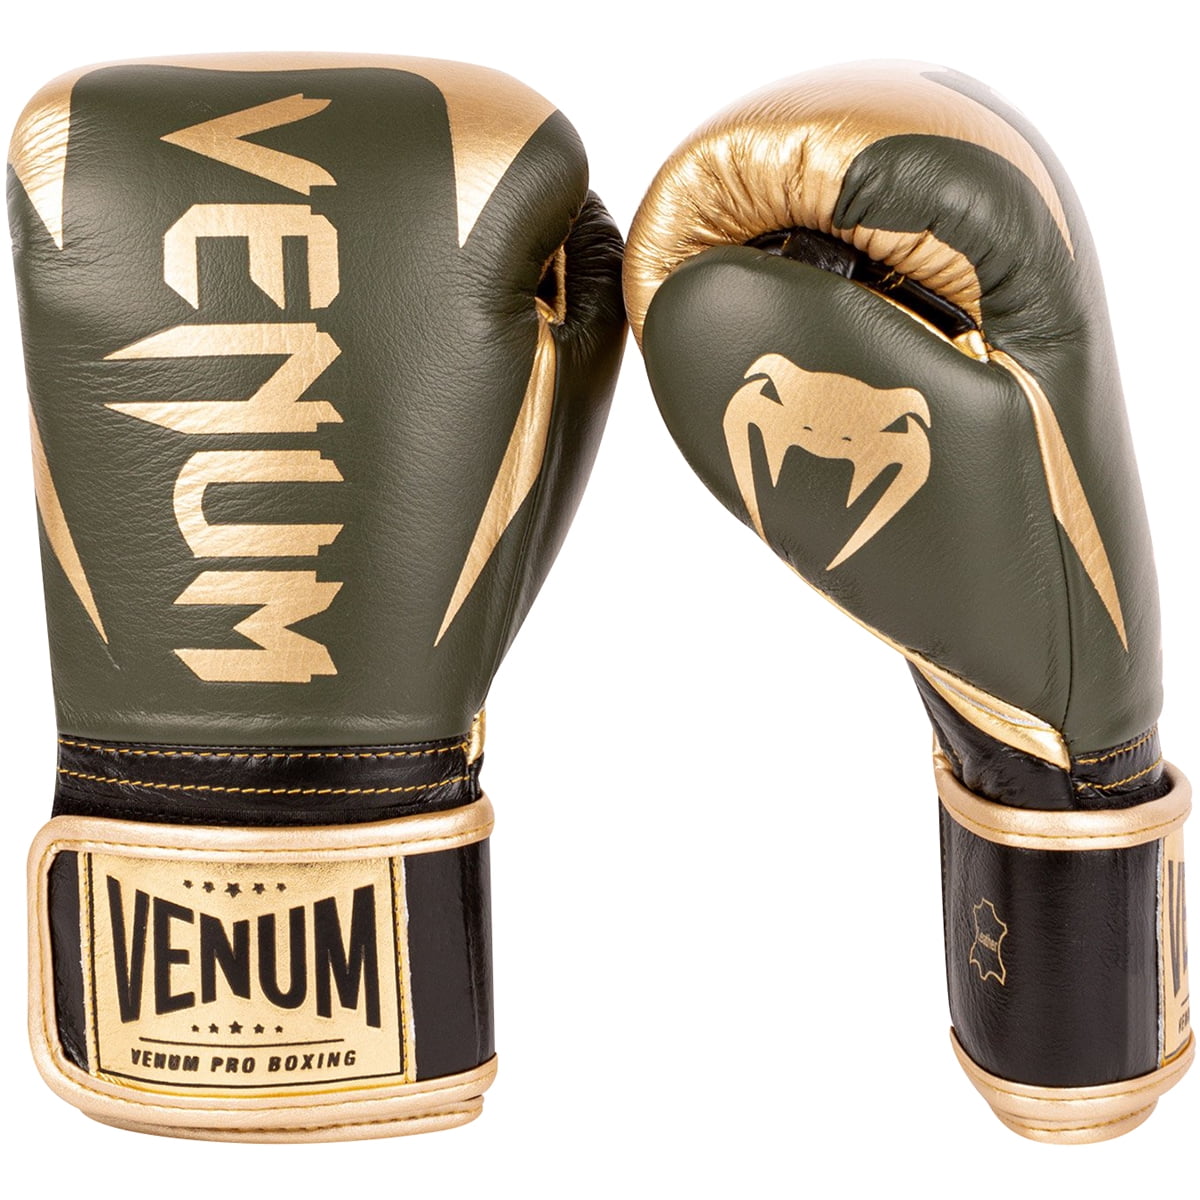 Venum Hammer Pro Hook and Loop Boxing Gloves - 12 oz. - Khaki/Gold